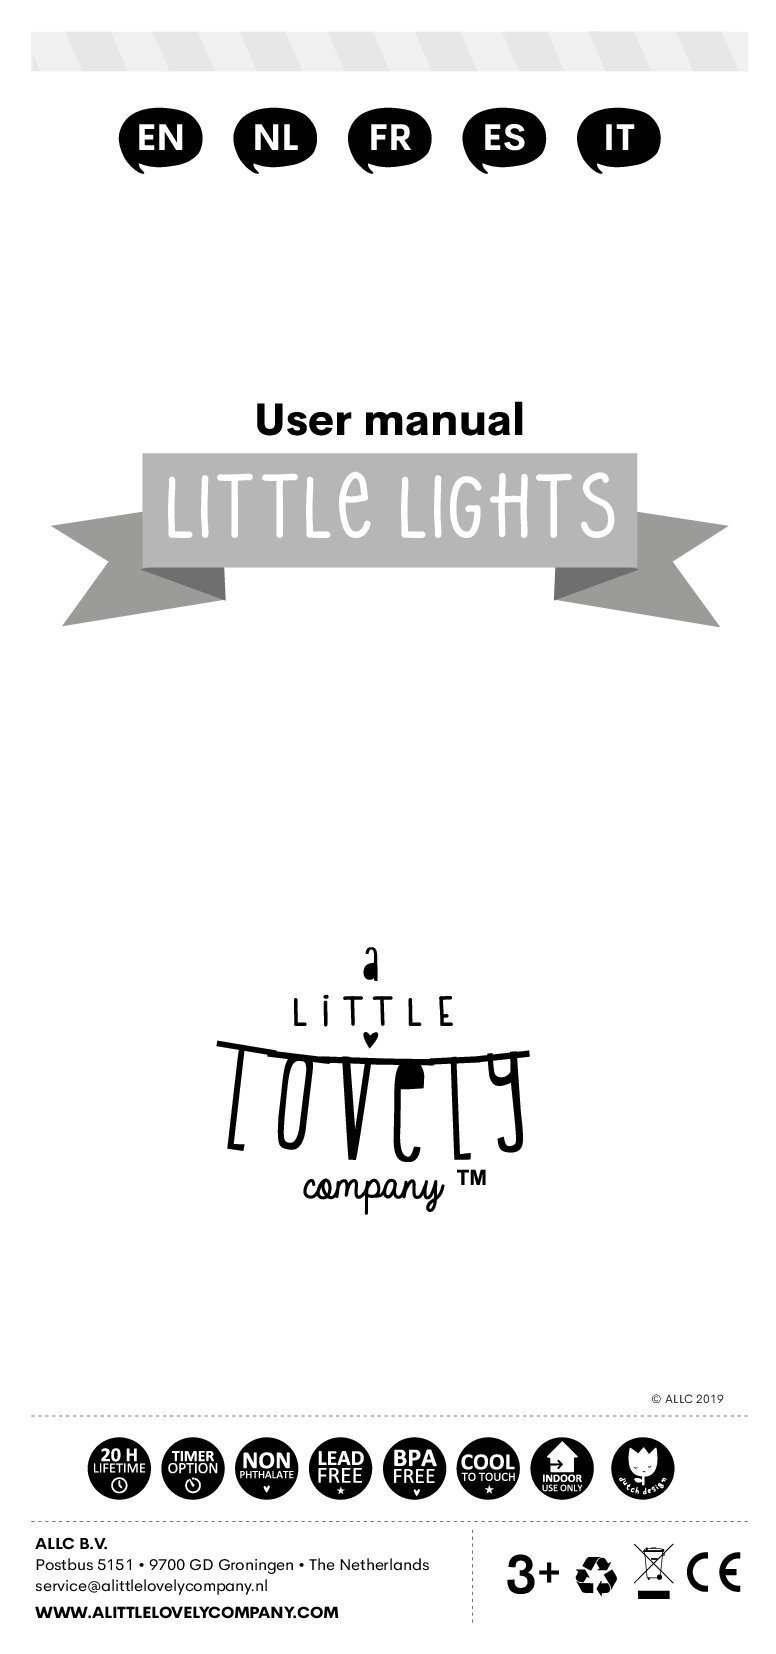 Generic 1PC LED Champignon Petite Lampe De Table,Mini Veilleuse De